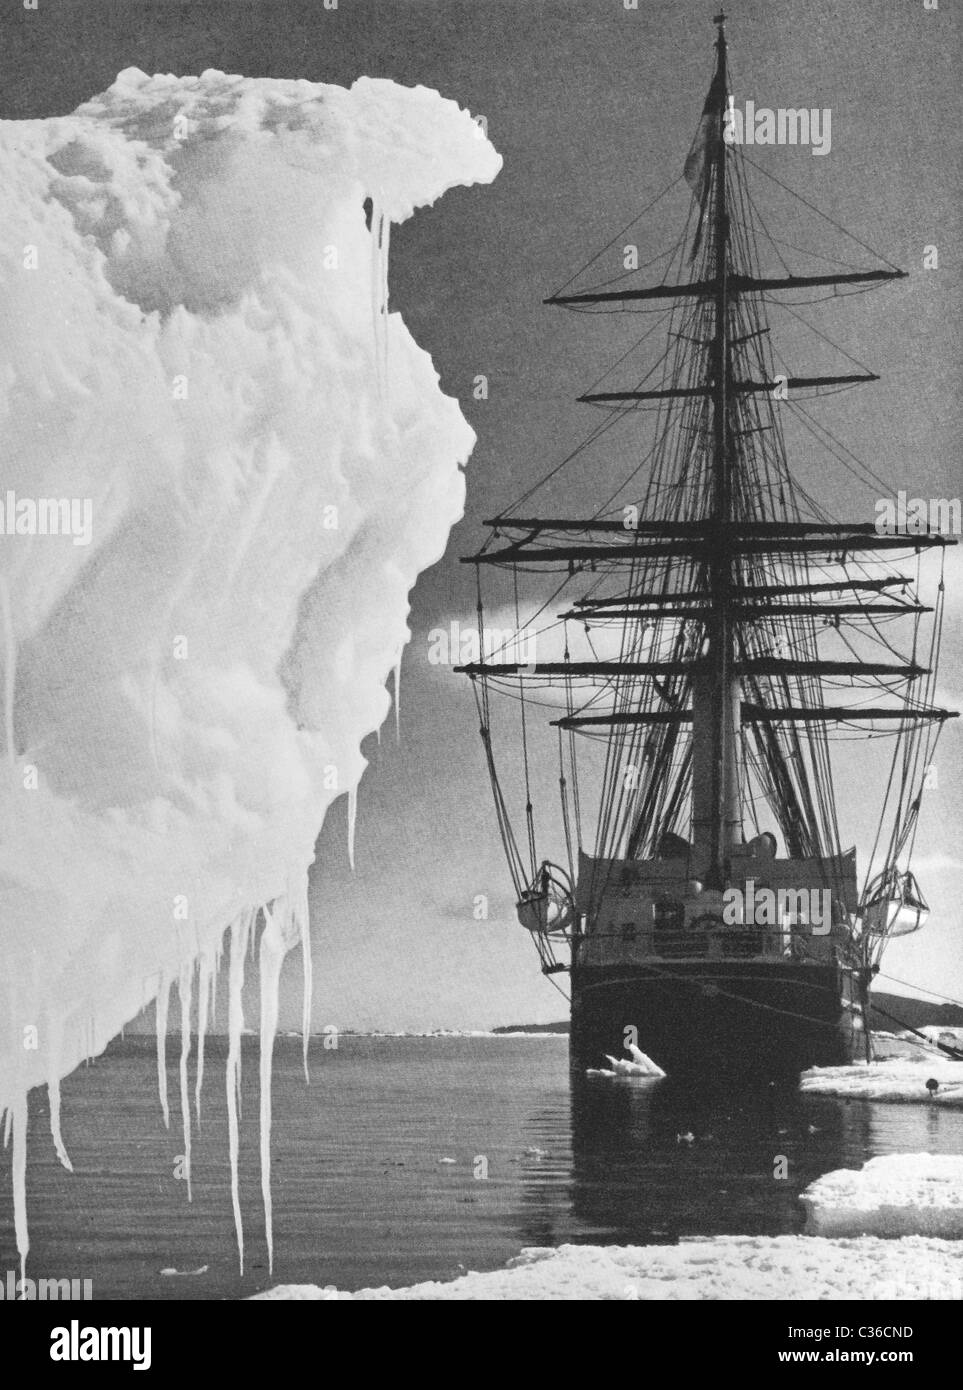 Vintage photo of Robert Falcon Scott's ship 'Terra Nova' moored in Antarctica during the Terra Nova Expedition of 1910 - 1913. Stock Photo